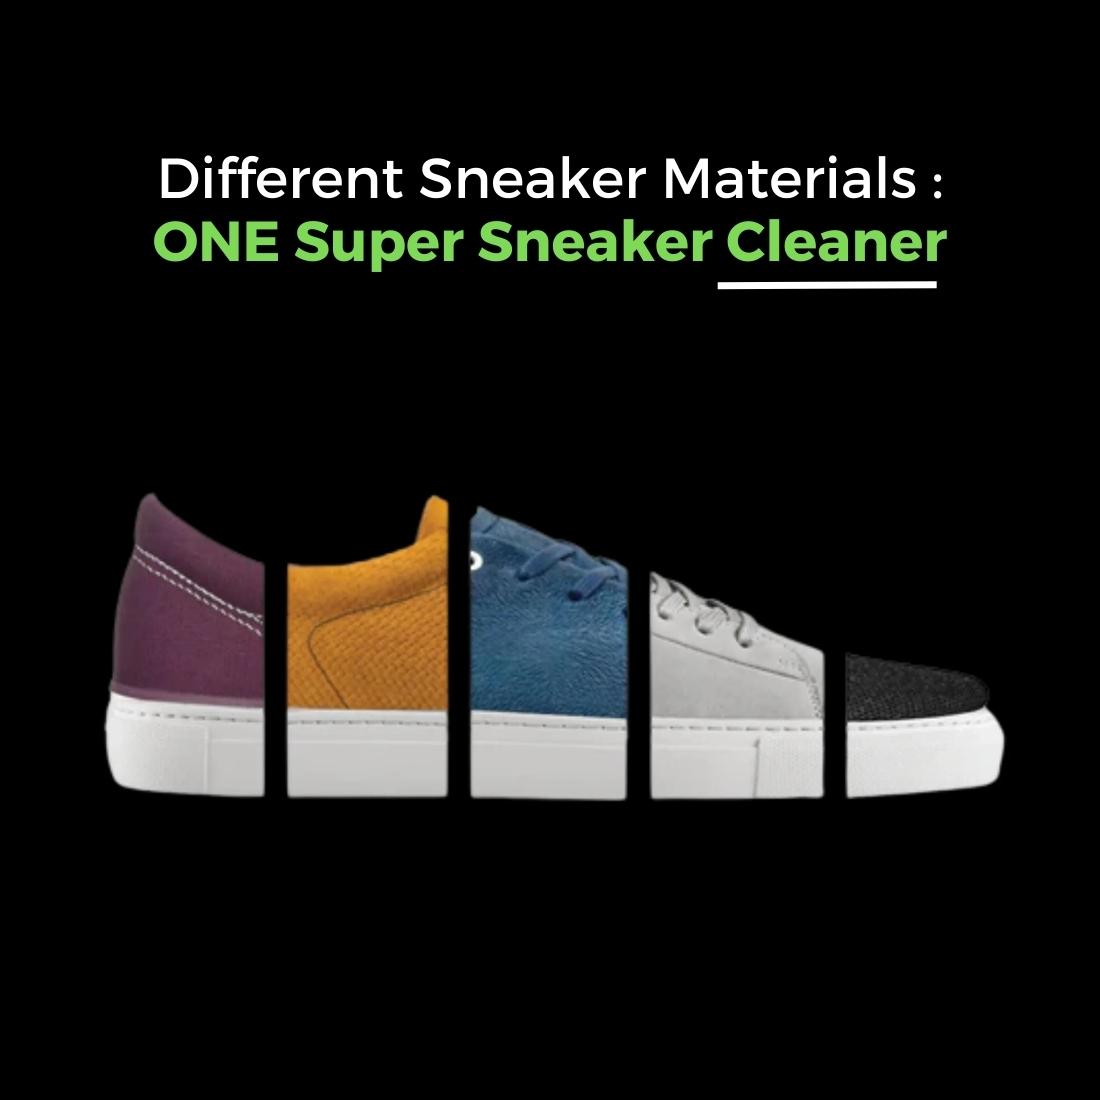 Helios Super Sneaker Cleaner & Shoe Whitener